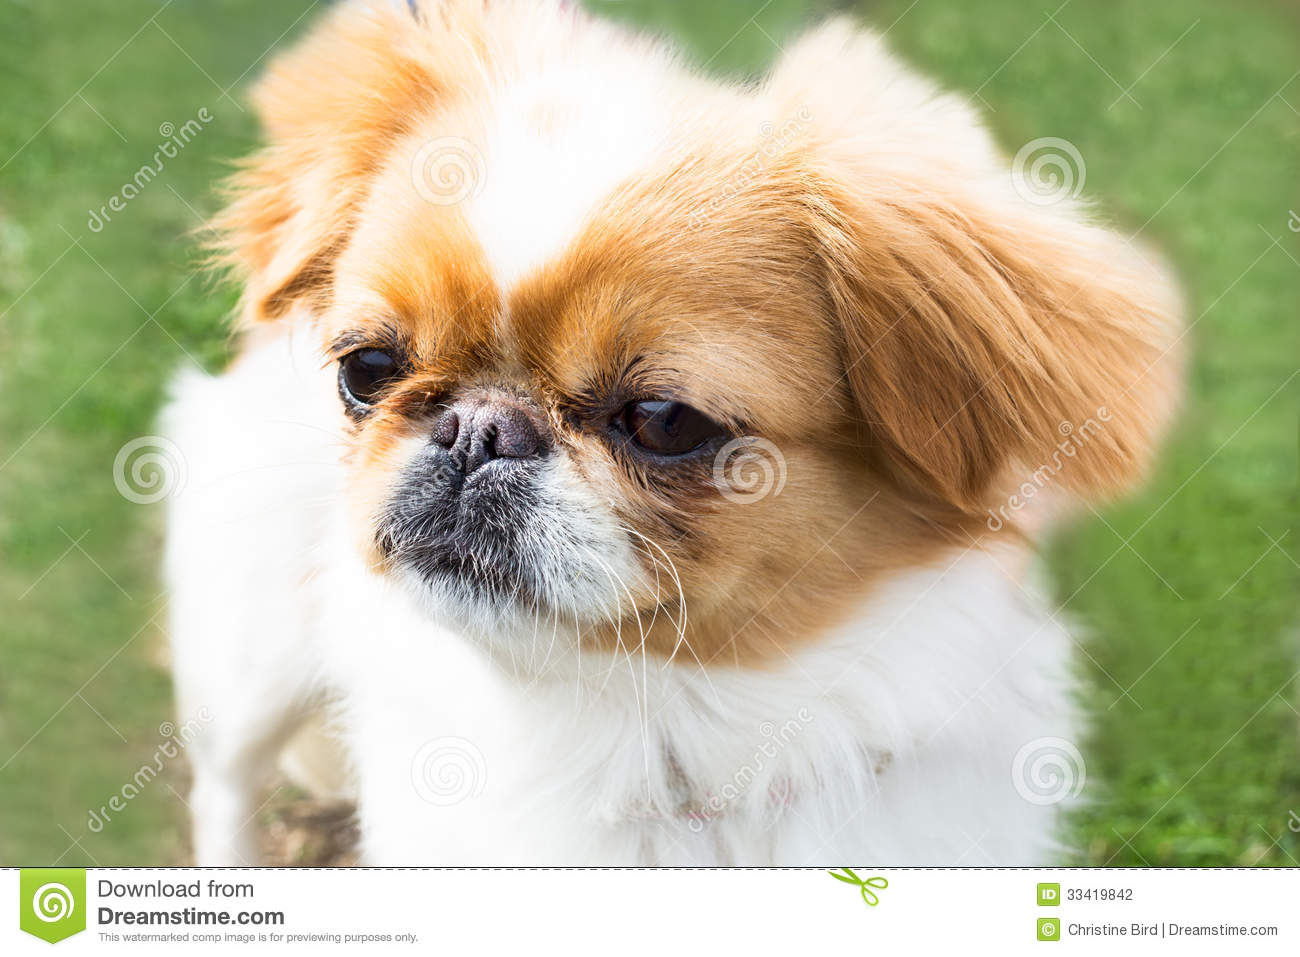 Cute Puppies Shih Tzu Dogs Wallpaper Desktop